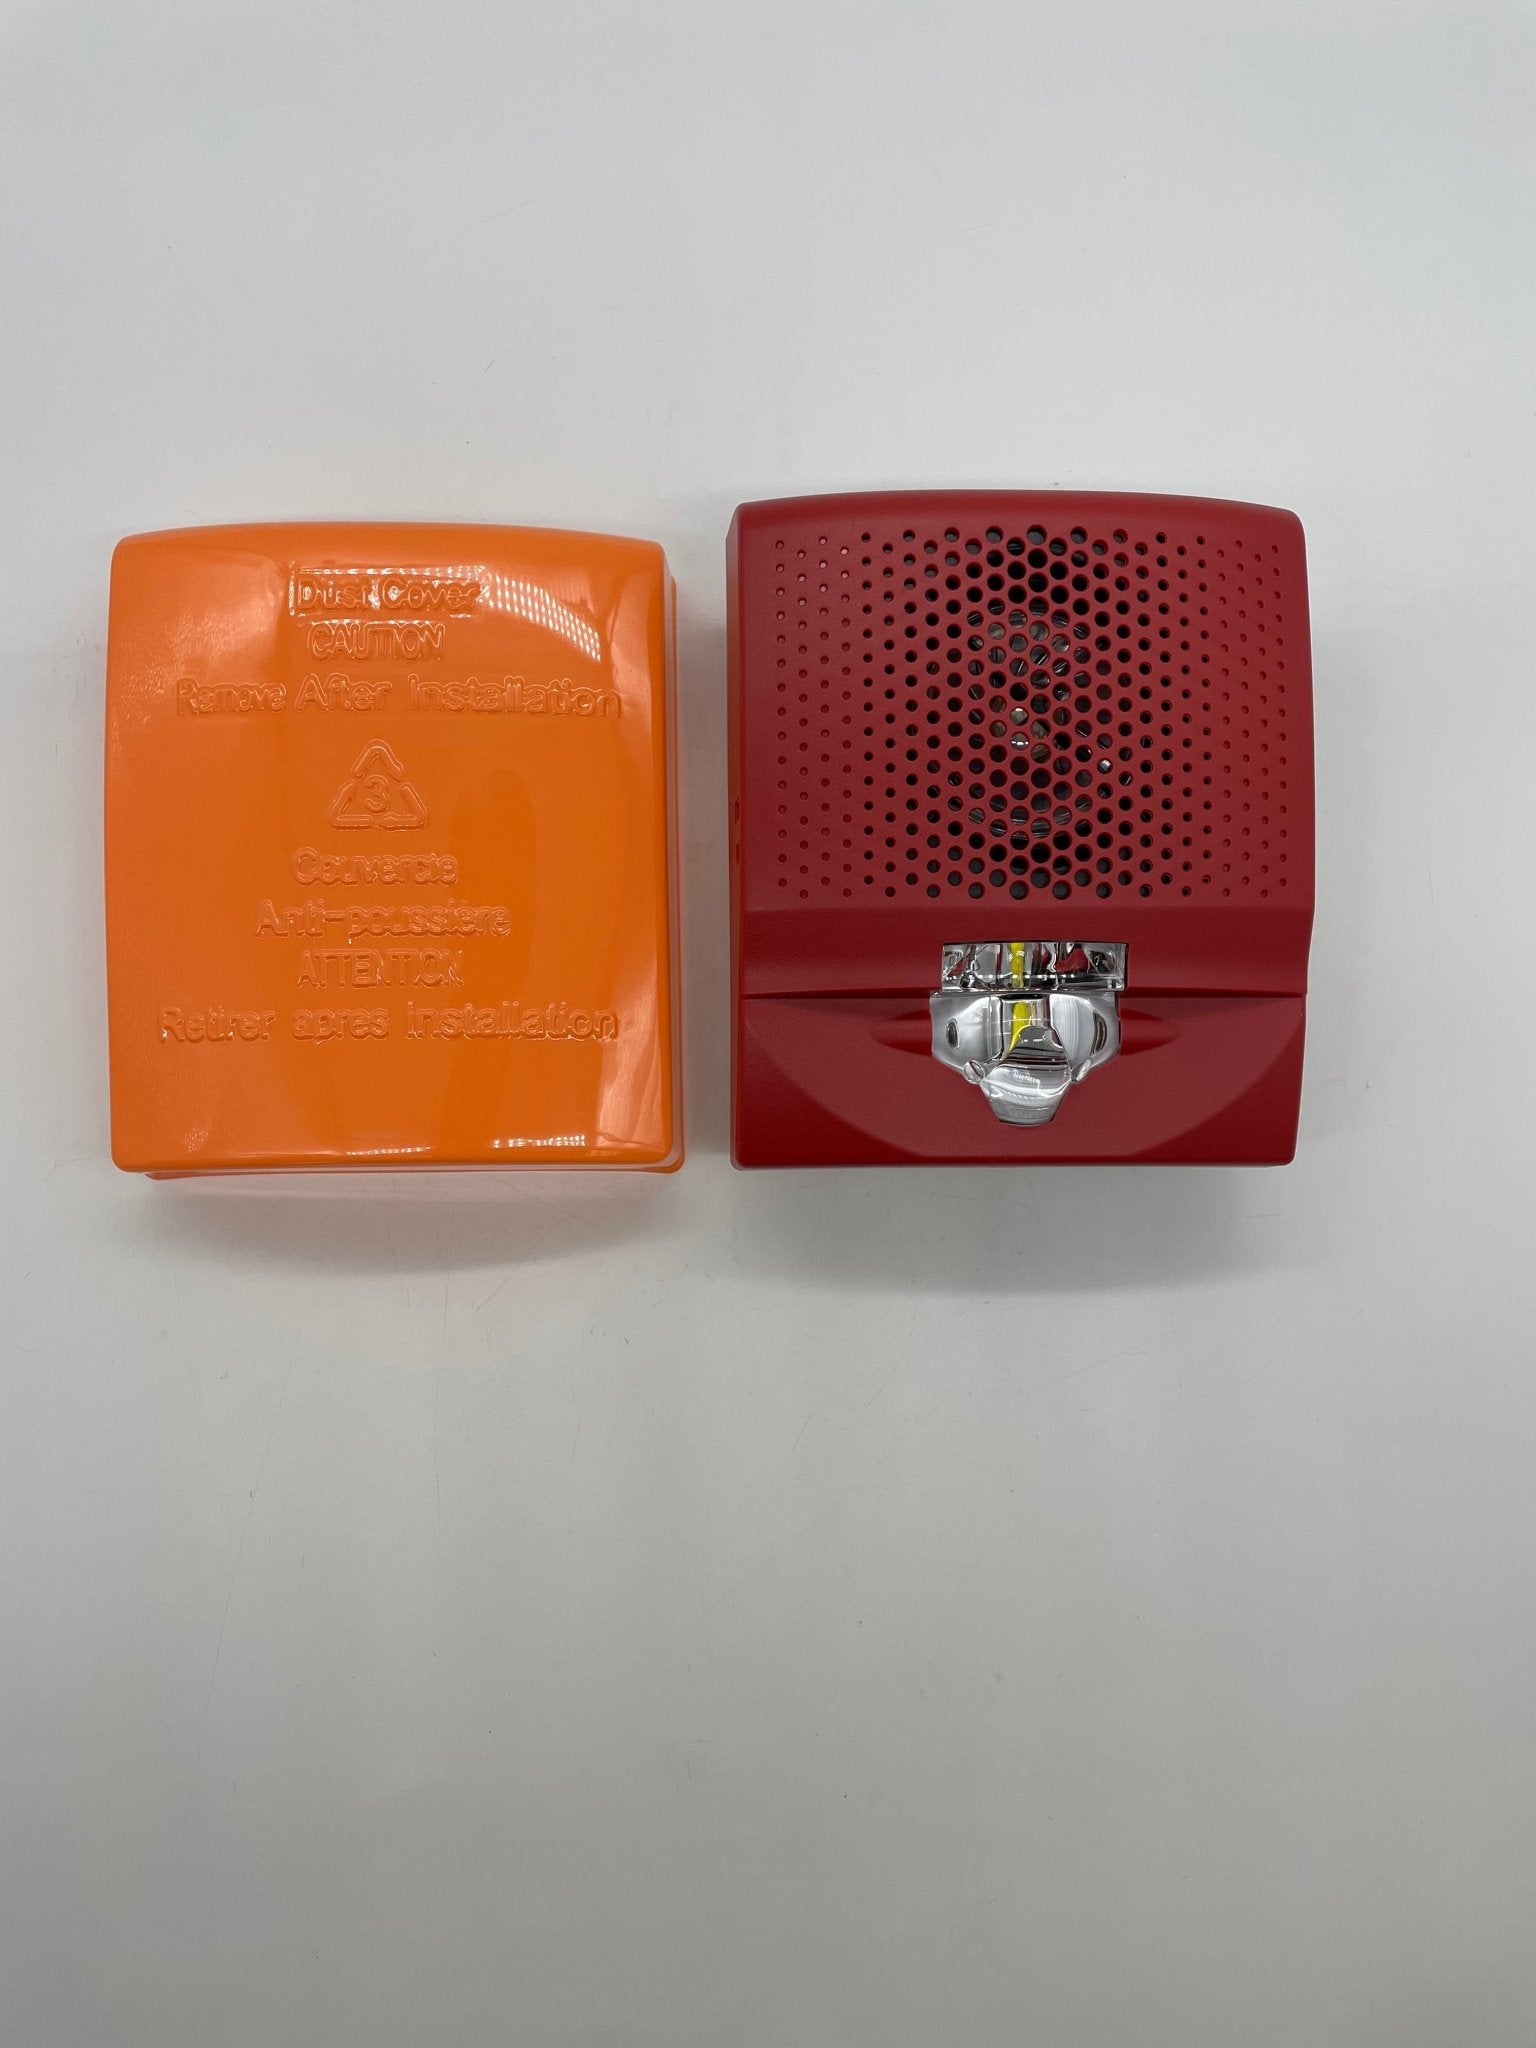 Edwards G4SVRN - The Fire Alarm Supplier